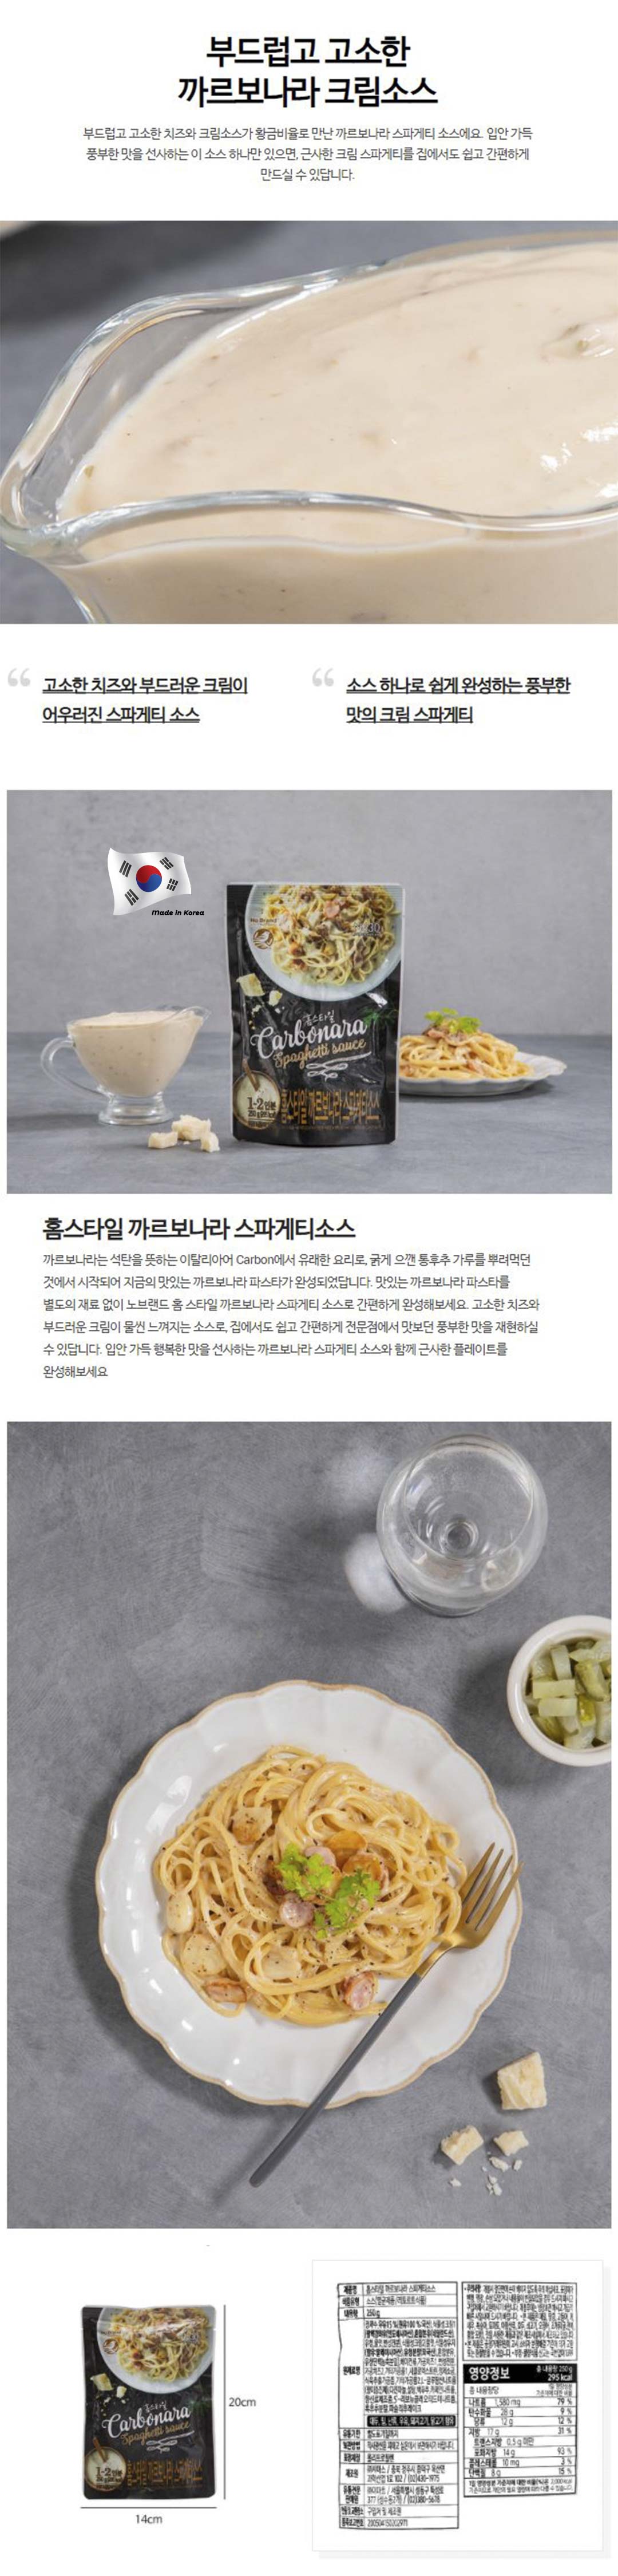 Korean No Brand Noodle Sauce 250G - Emart VN